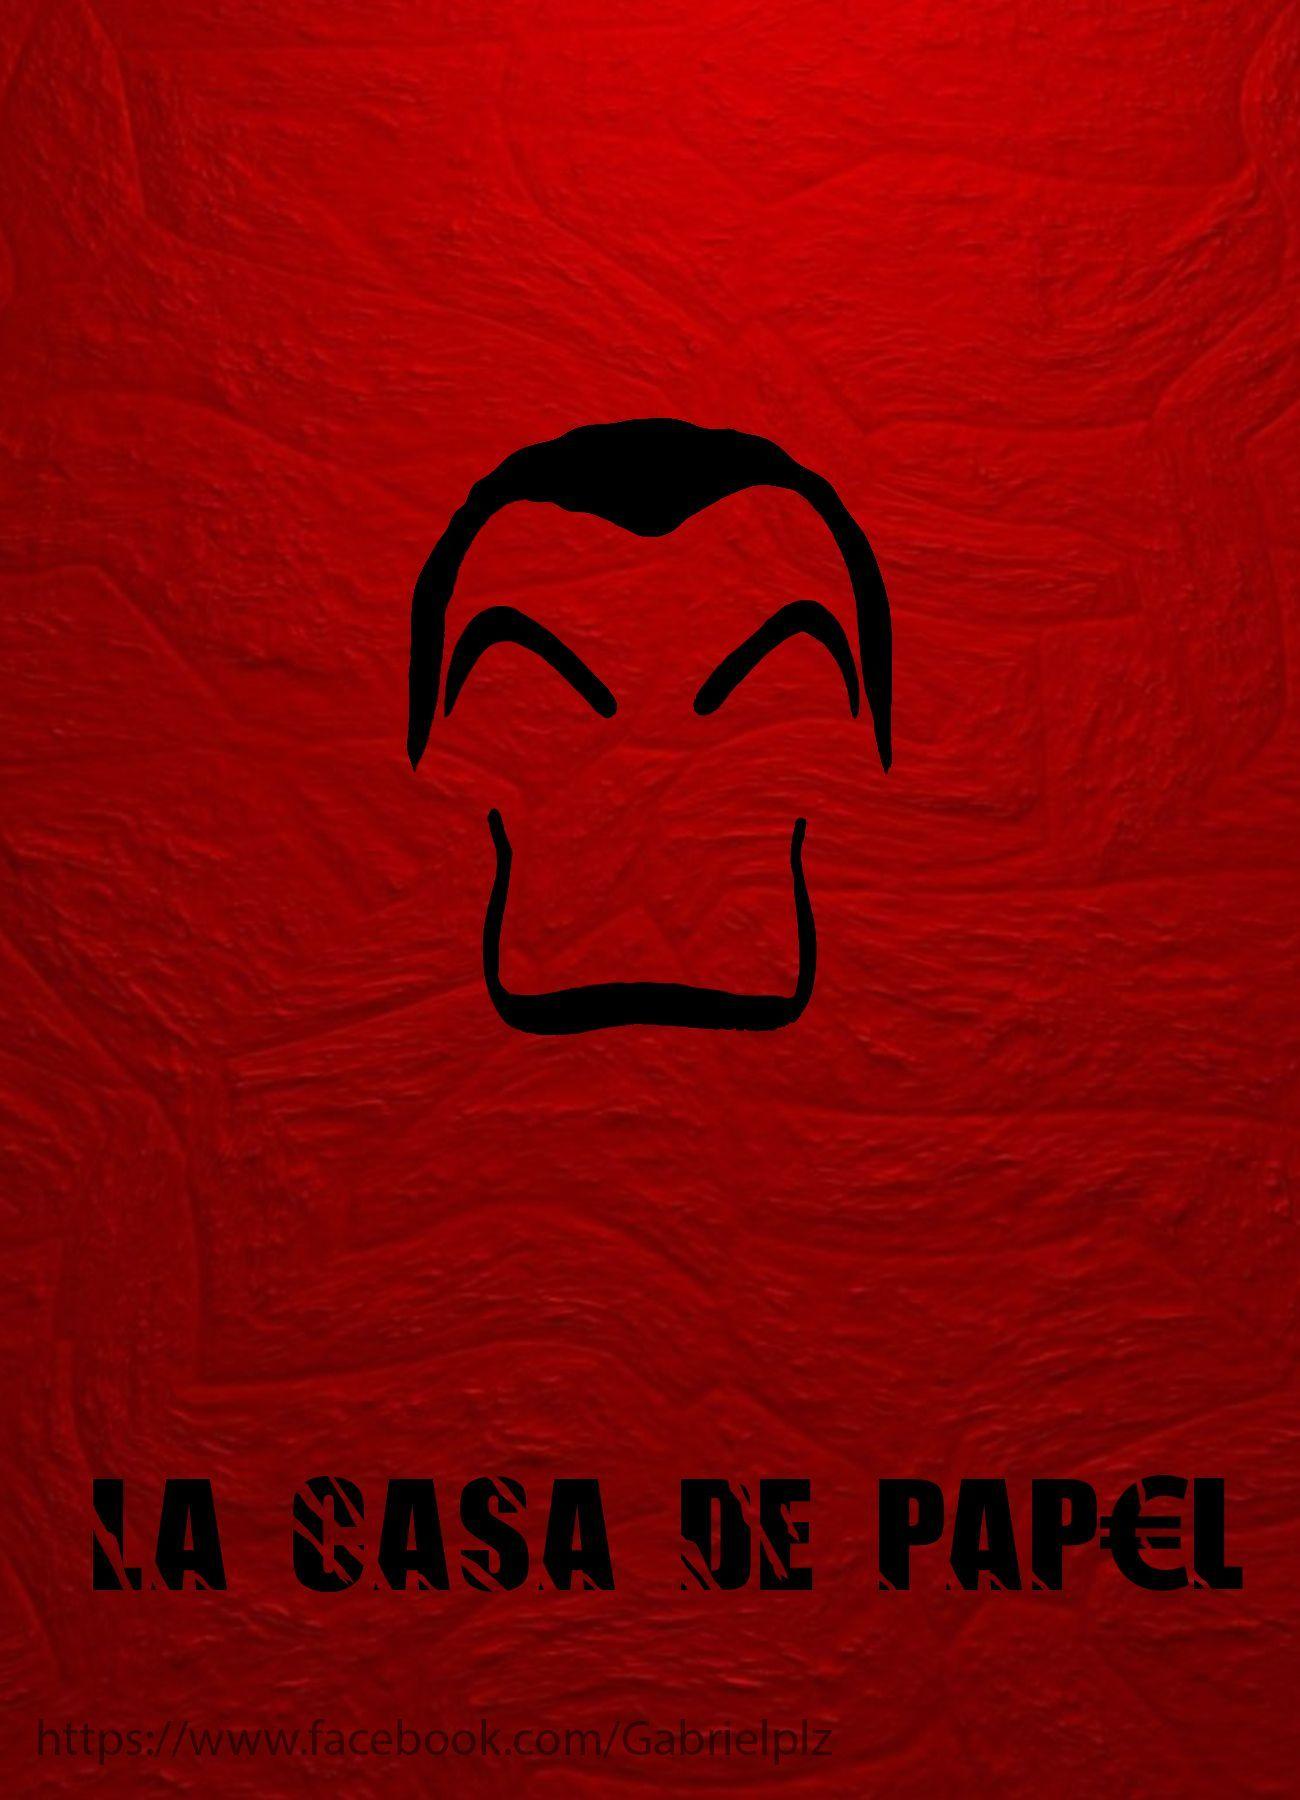 La Casa De Papel Wallpaper iPhone, Desktop and Android. Best shows on netflix, iPhone wallpaper, Wallpaper